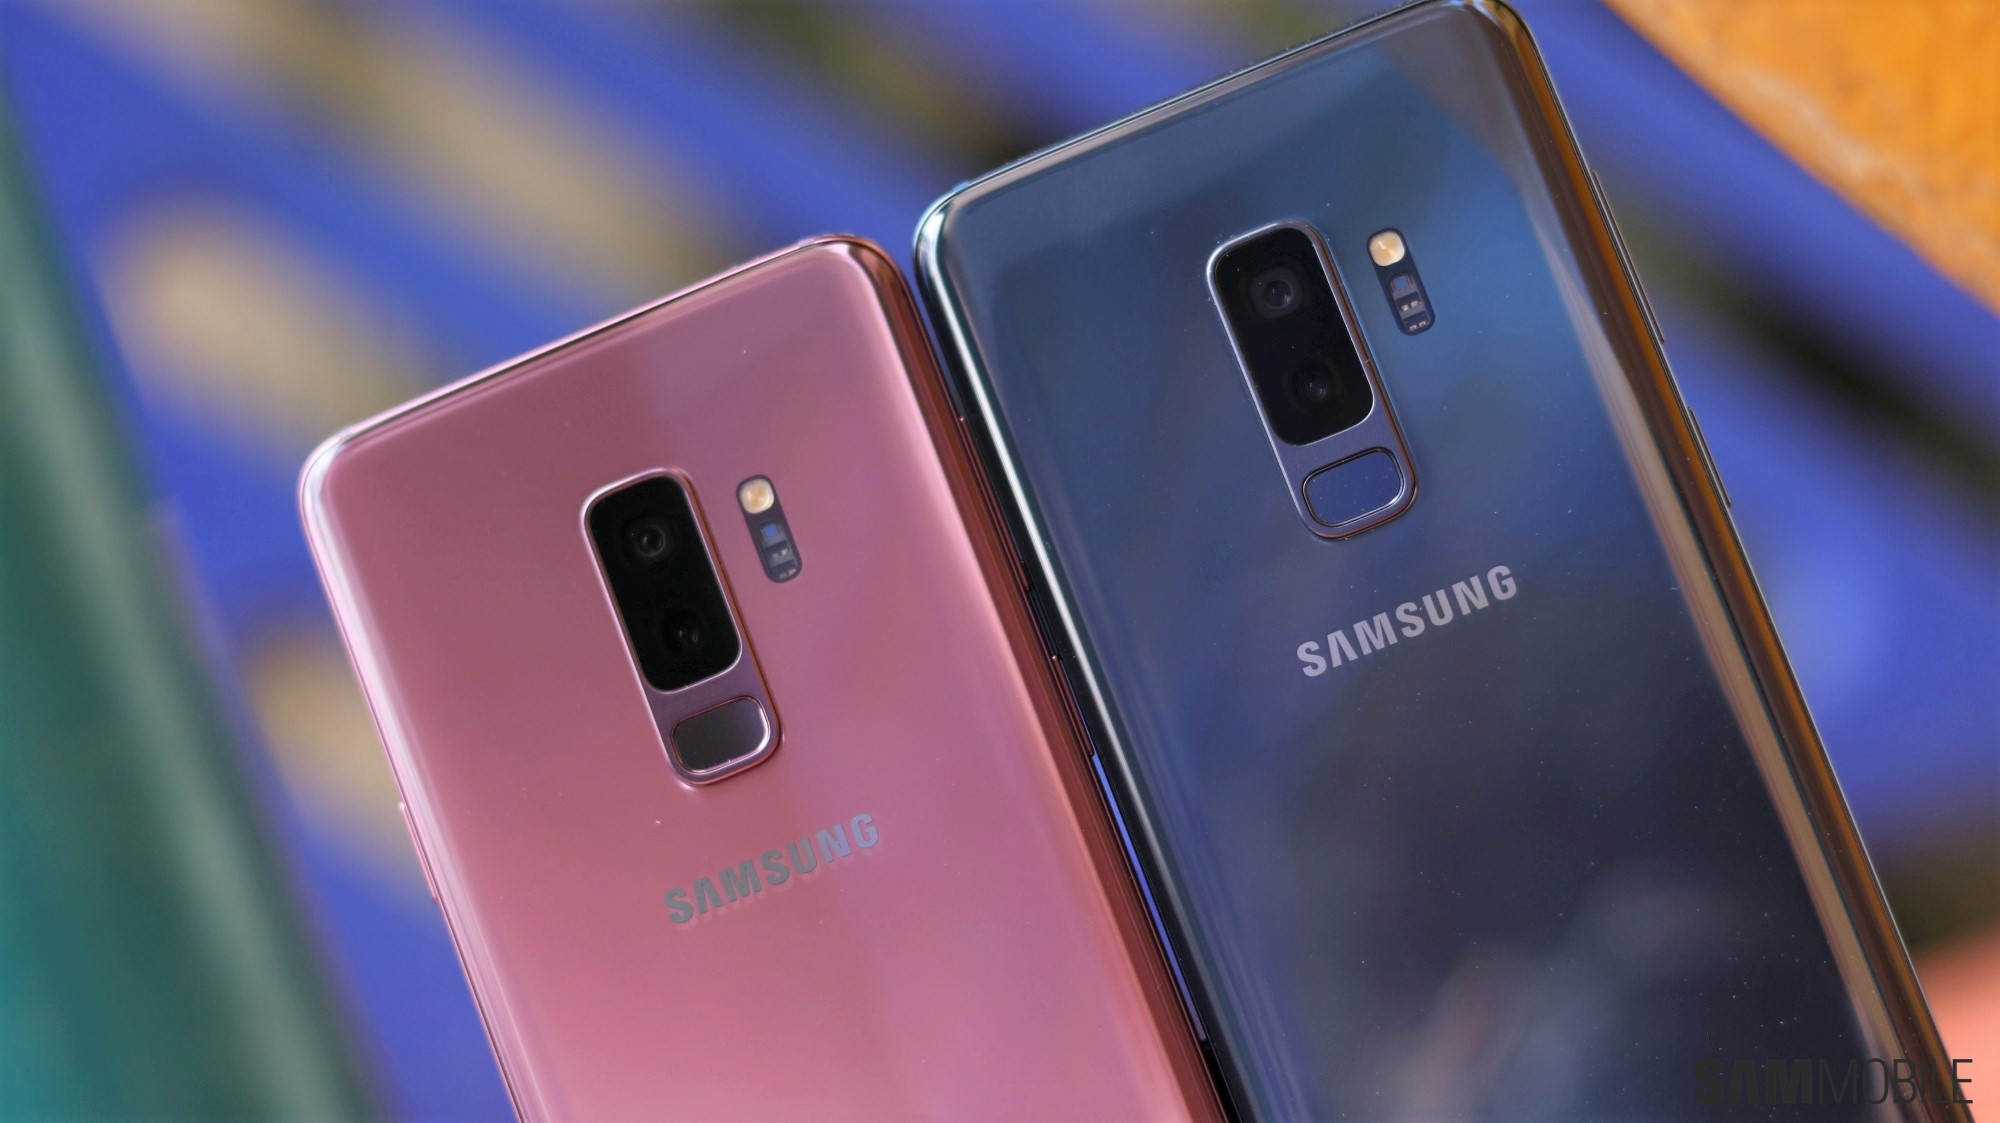 Samsung s9 11. Samsung Galaxy s9. Galaxy s9 Coral Blue. Samsung Galaxy s9 Blue. Samsung s9+ цвета.